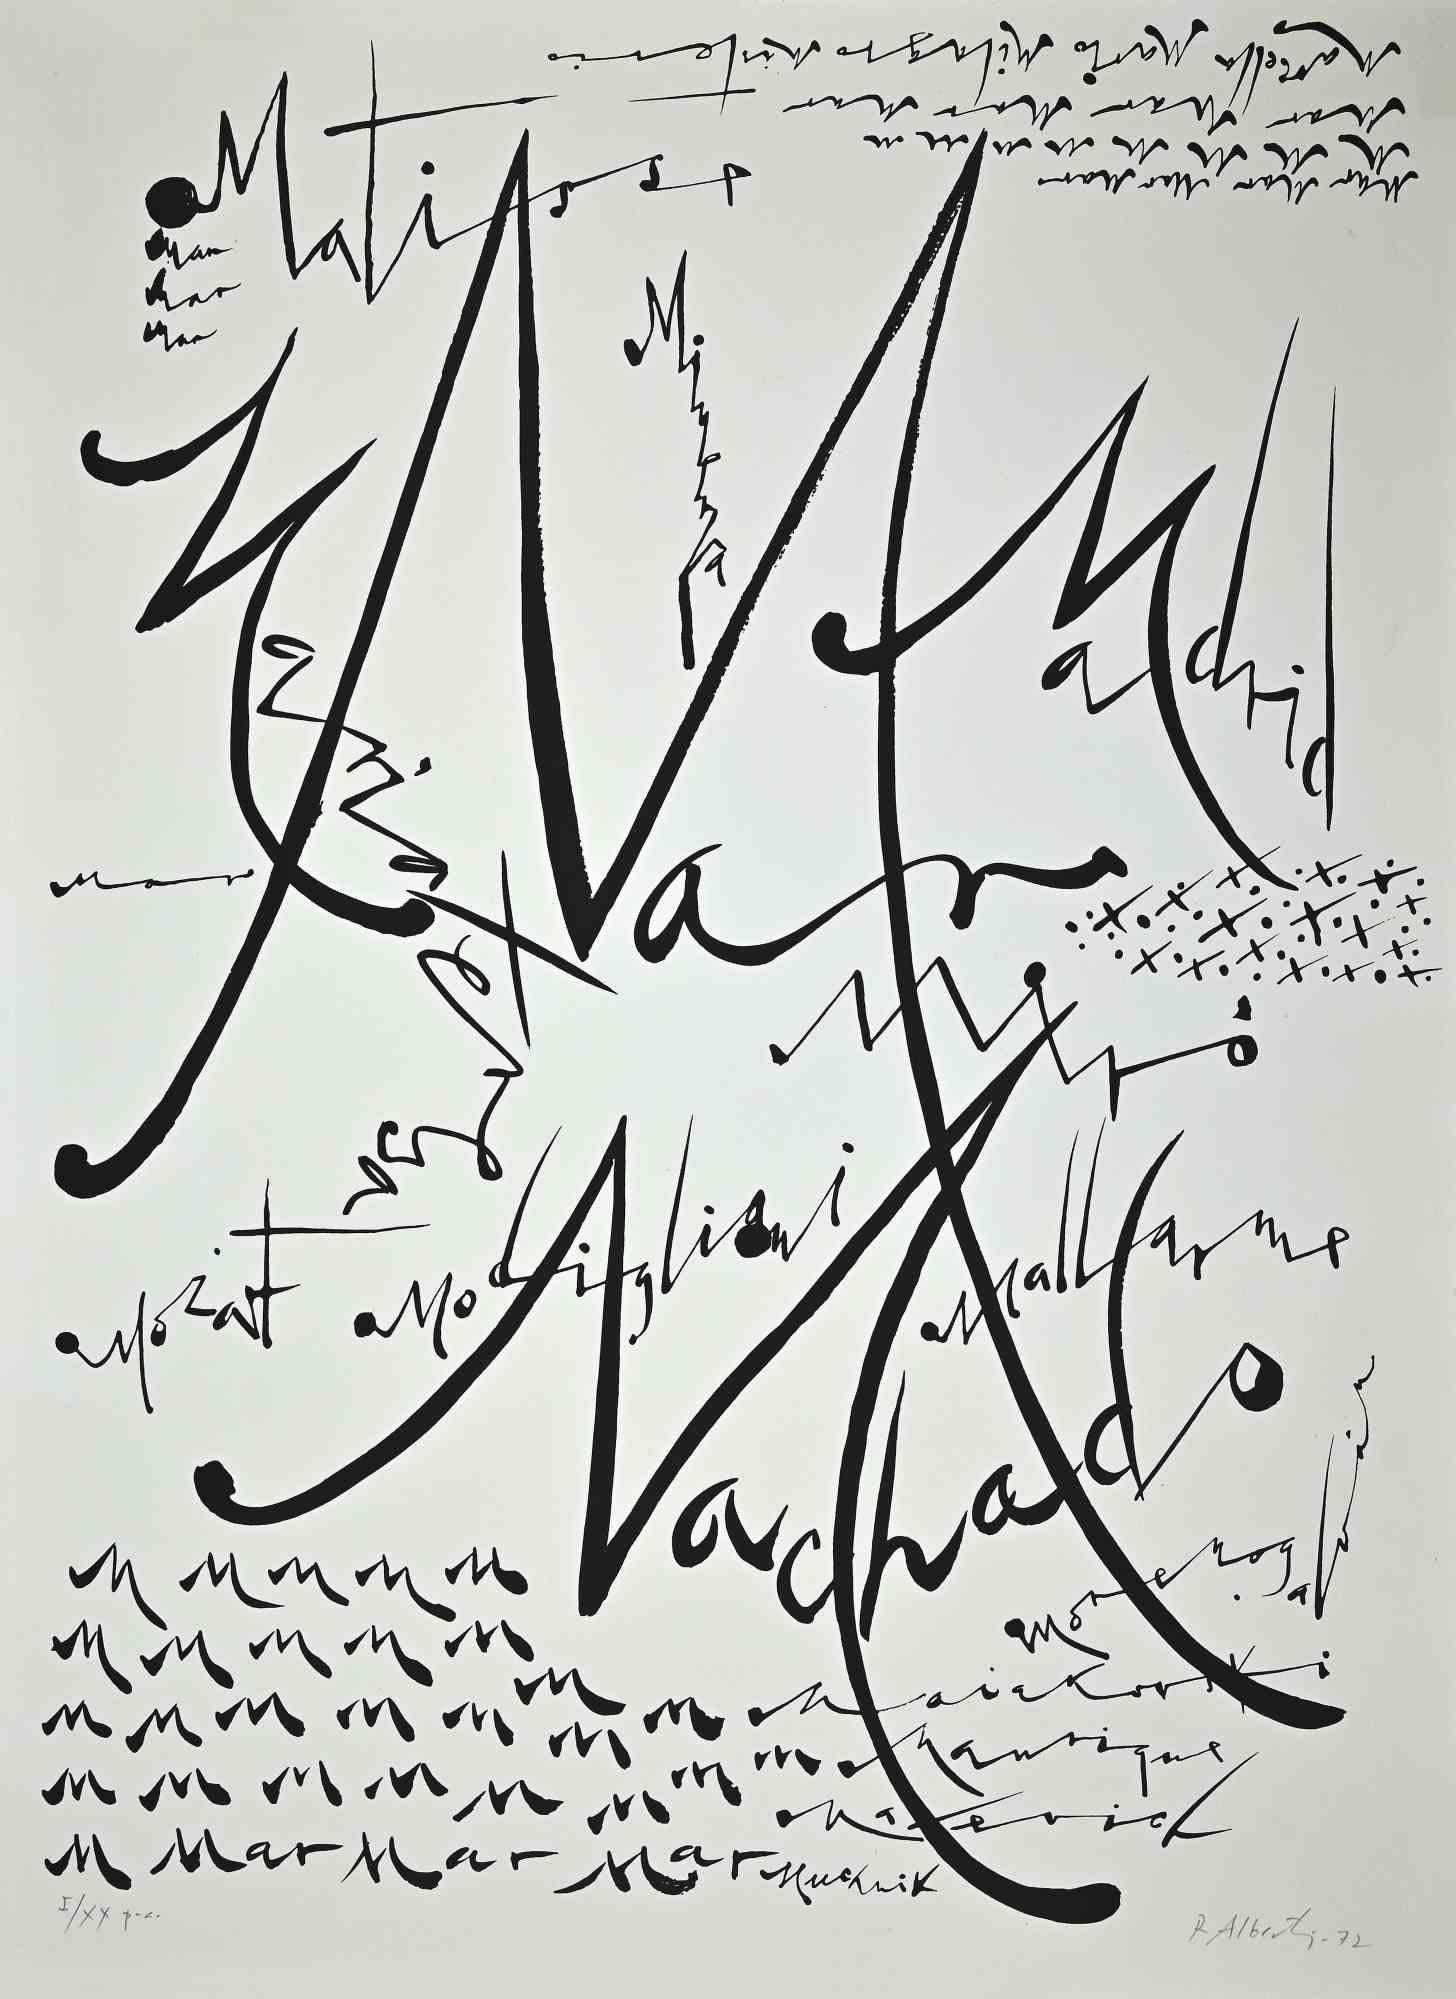 Rafael Alberti Abstract Print - Letter M - Original Lithograph by Raphael Alberti - 1972